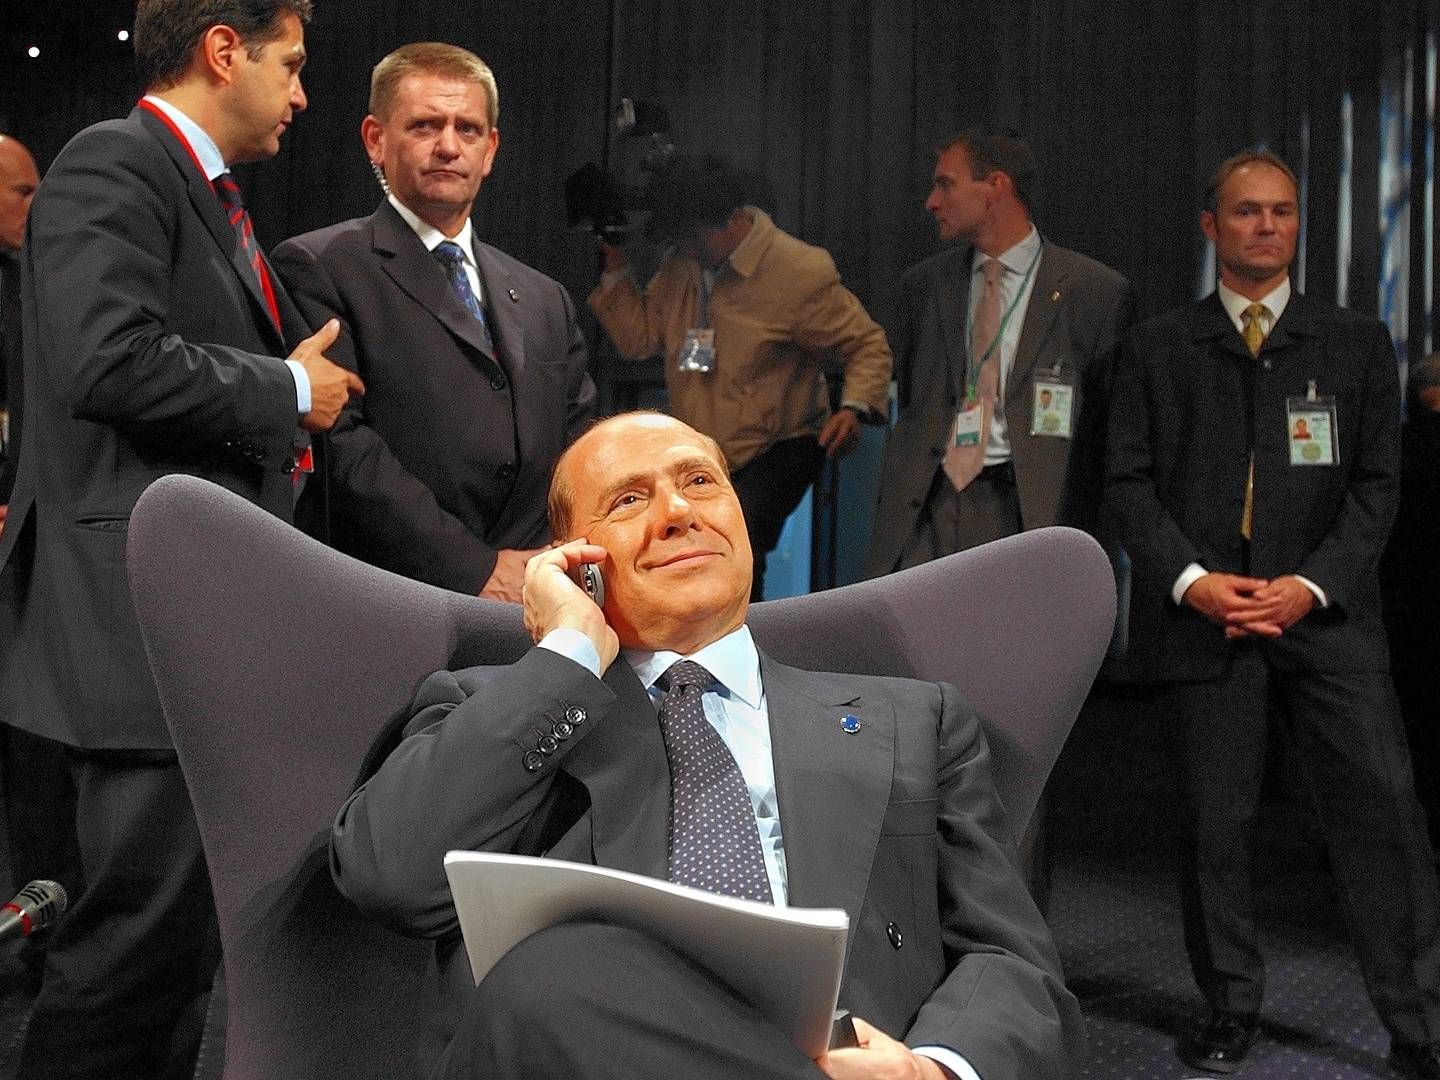 Den tidligere italienske premierminister og mediemogul Silvio Berlusconi er gået bort. Han blev 86 år. | Foto: Lars Krabbe